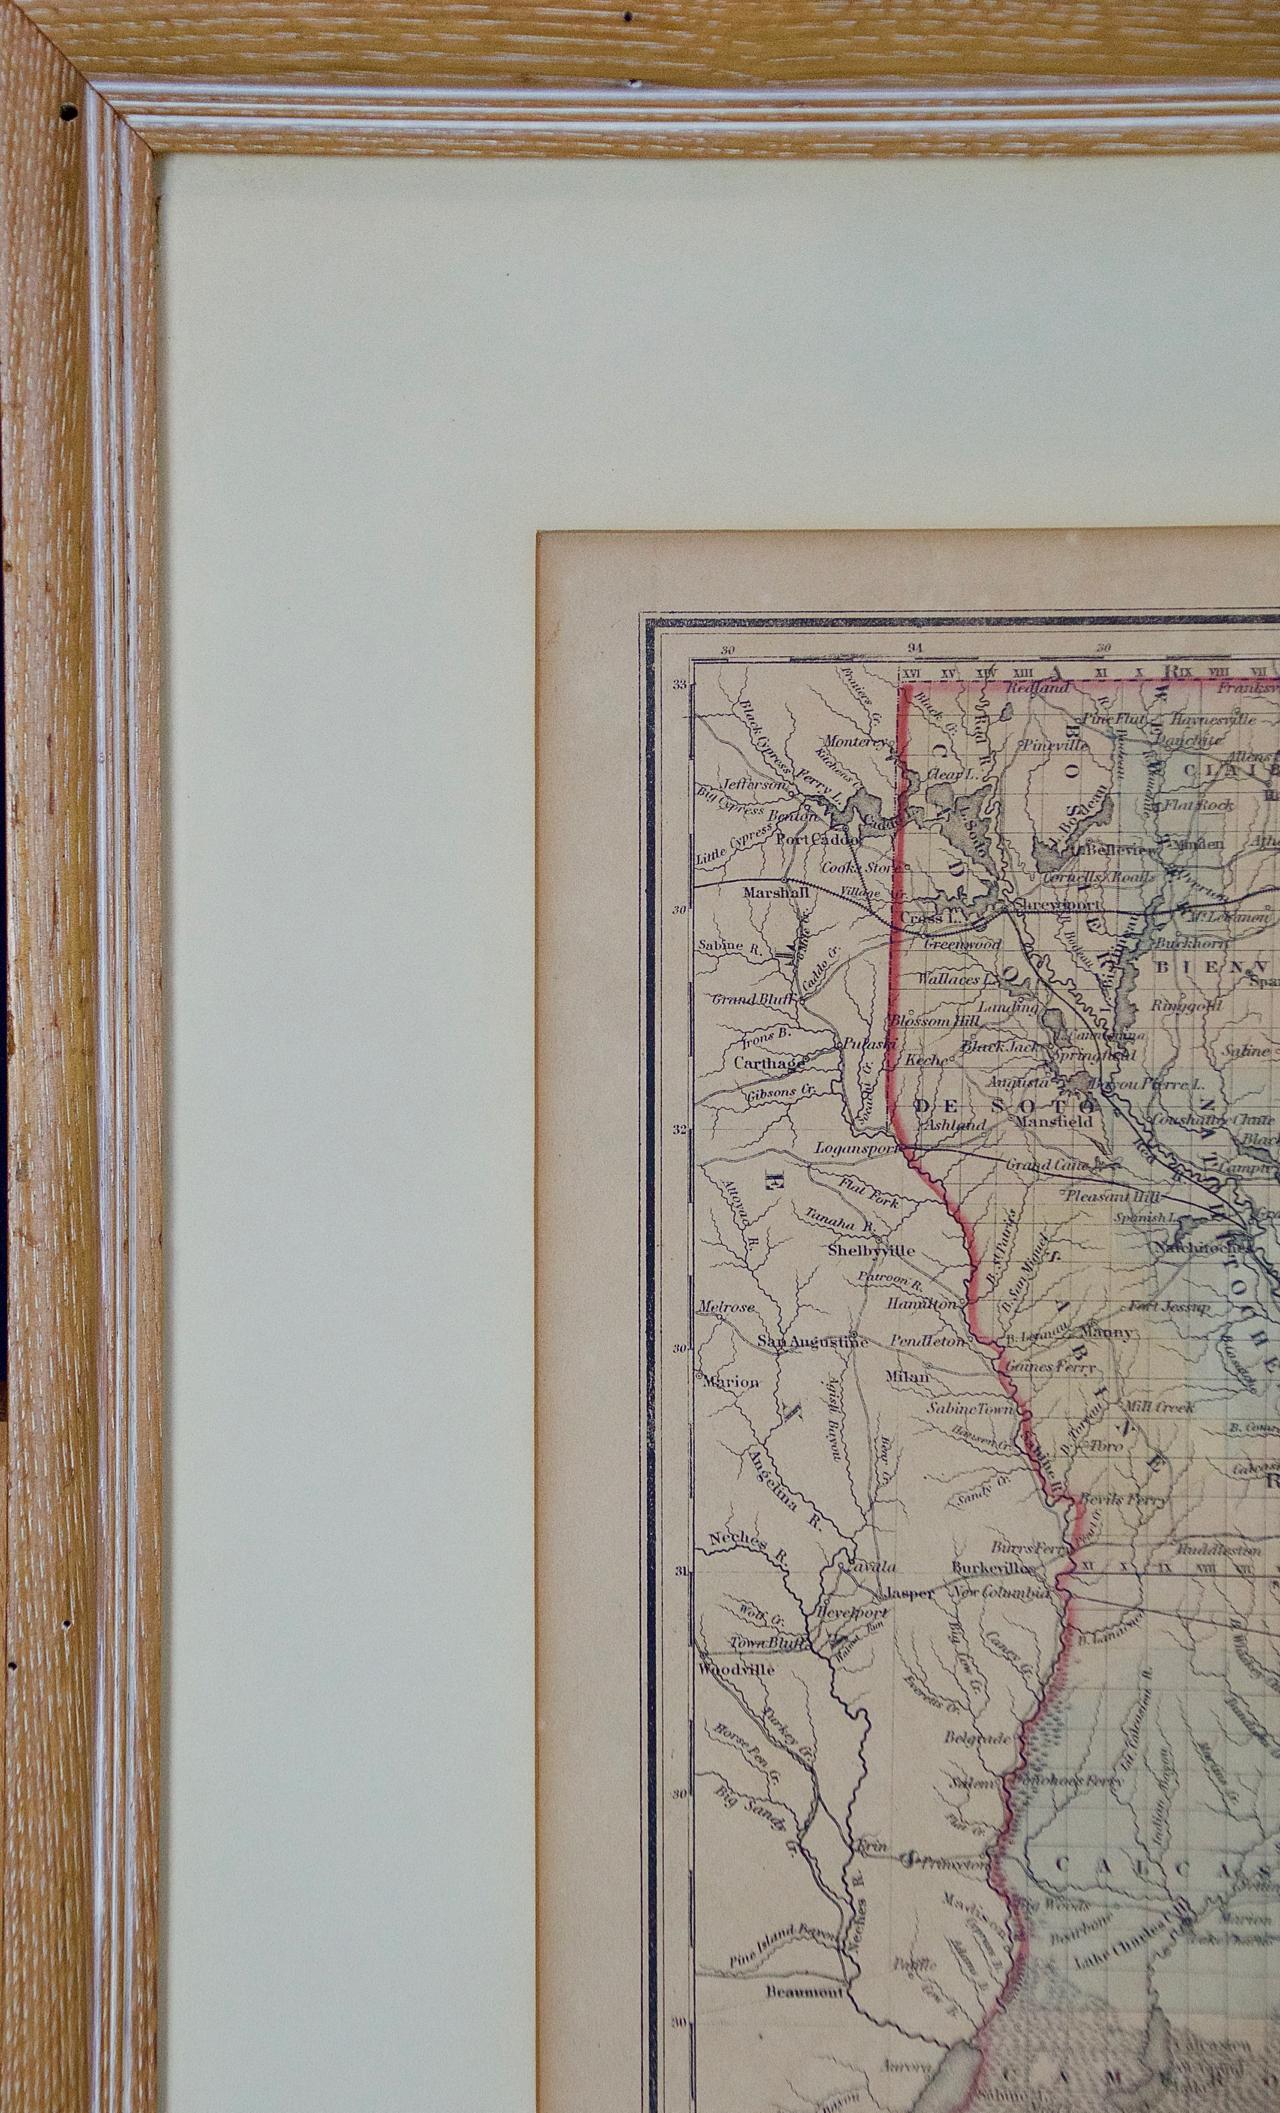 Louisiana: A Framed 19th Century Map by O.W. Gray - Brown Landscape Print by Ormando Wyllis Gray